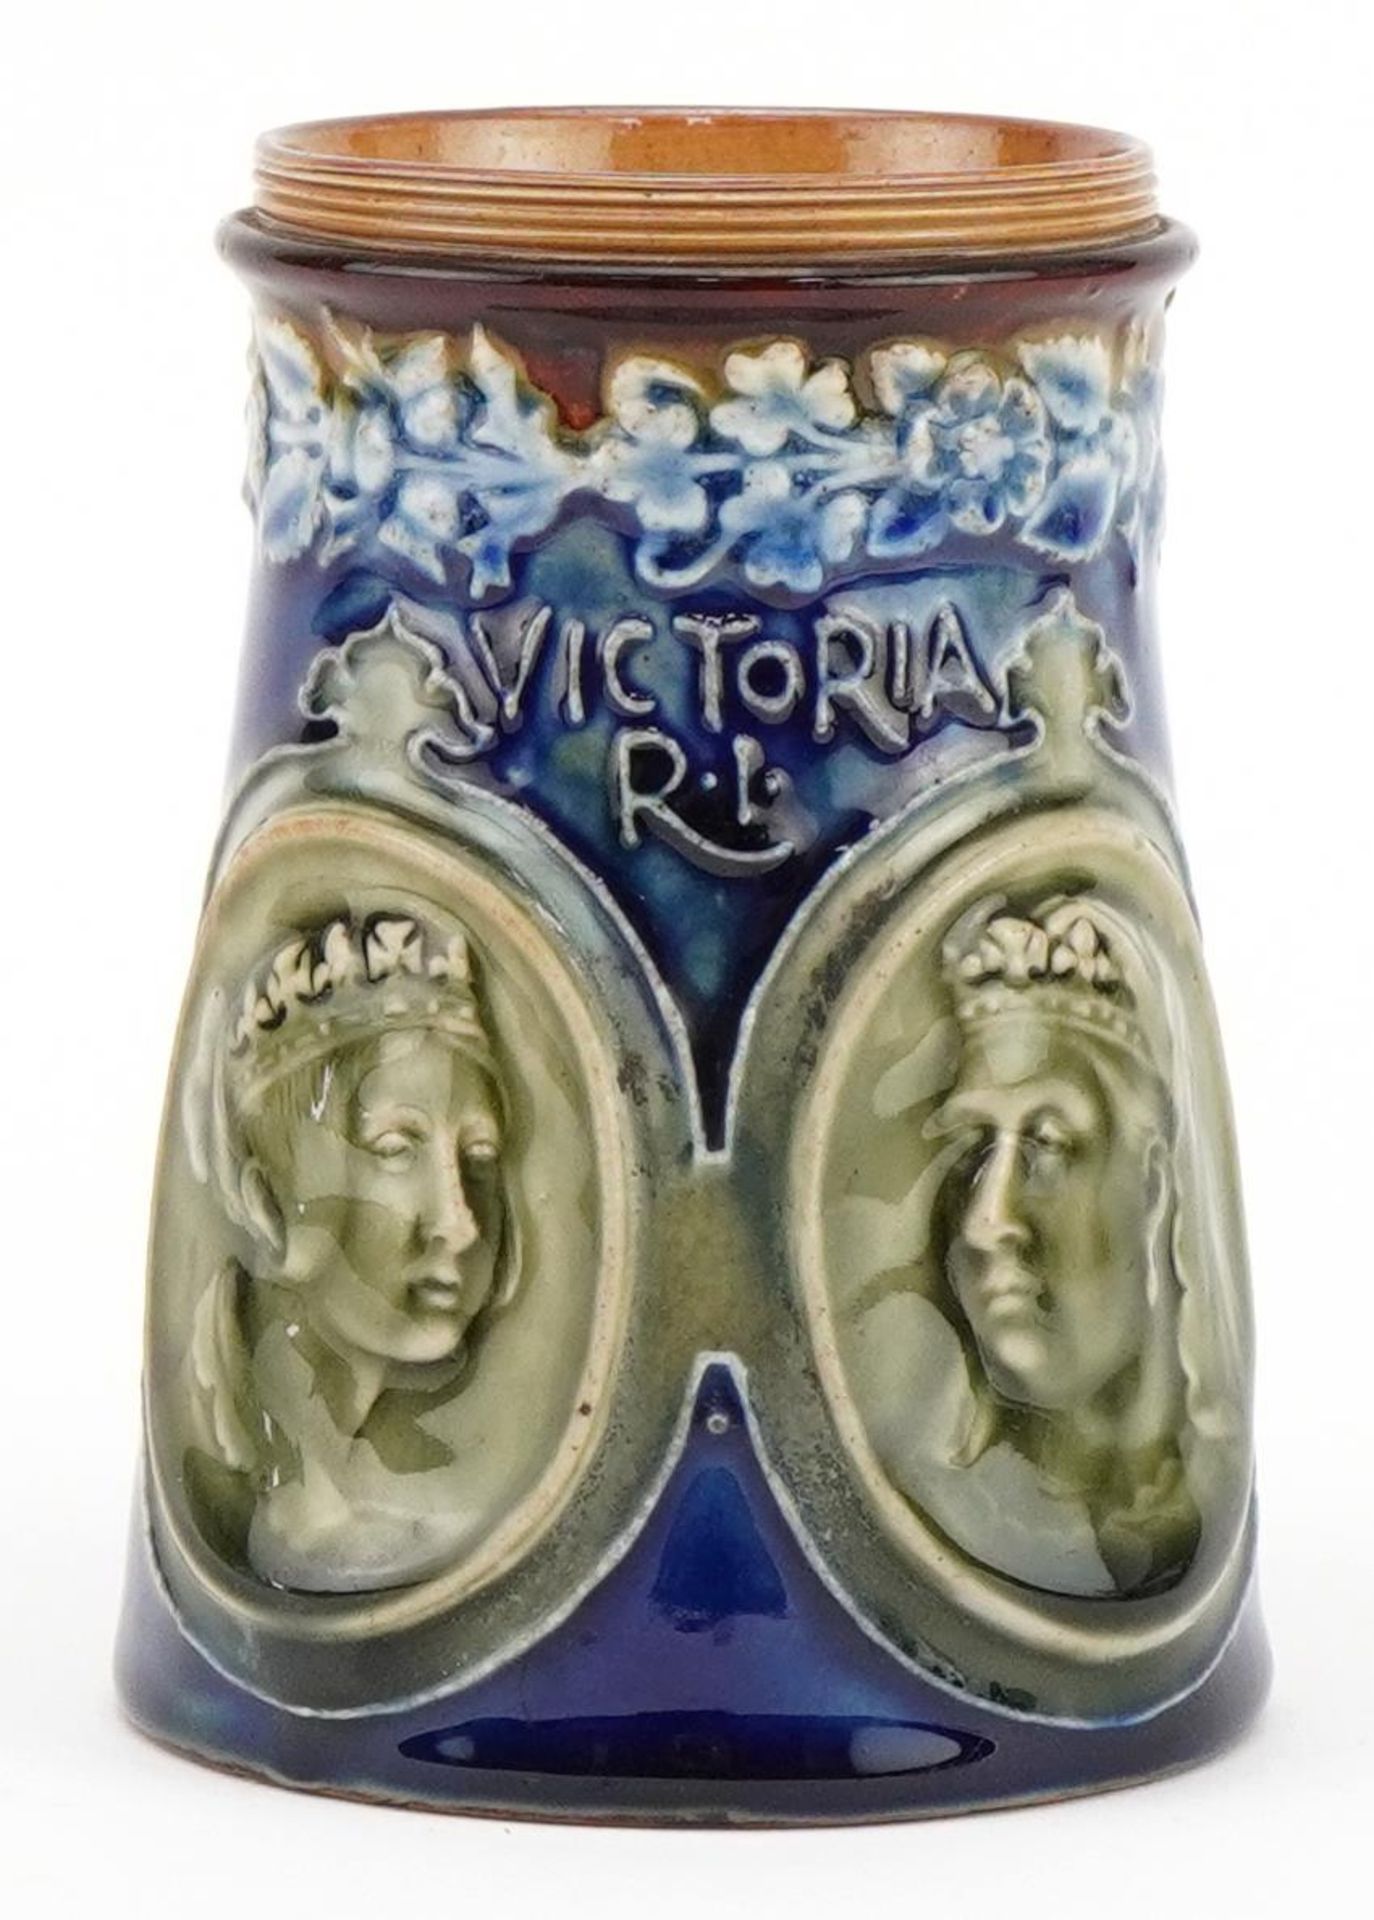 Doulton Lambeth, Victorian diamond jubilee mug commemorating Victoria RI 1837-1897, 11cm high : - Image 2 of 5